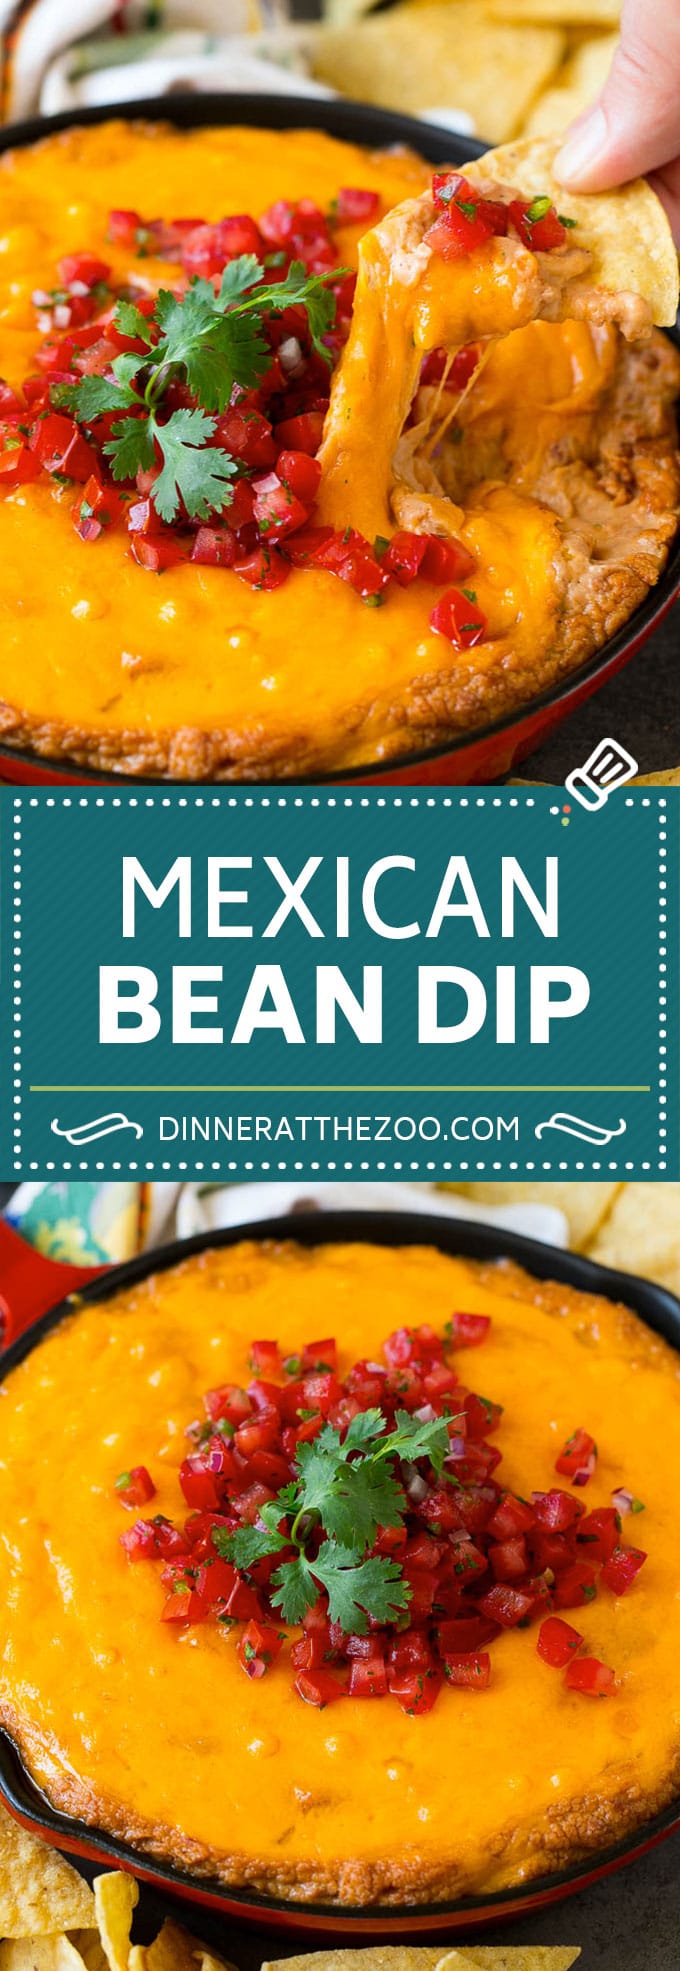 Bean Dip Recipe | Mexican Dip #dip #appetizer #mexicanfood #beans #cheese #dinneratthezoo